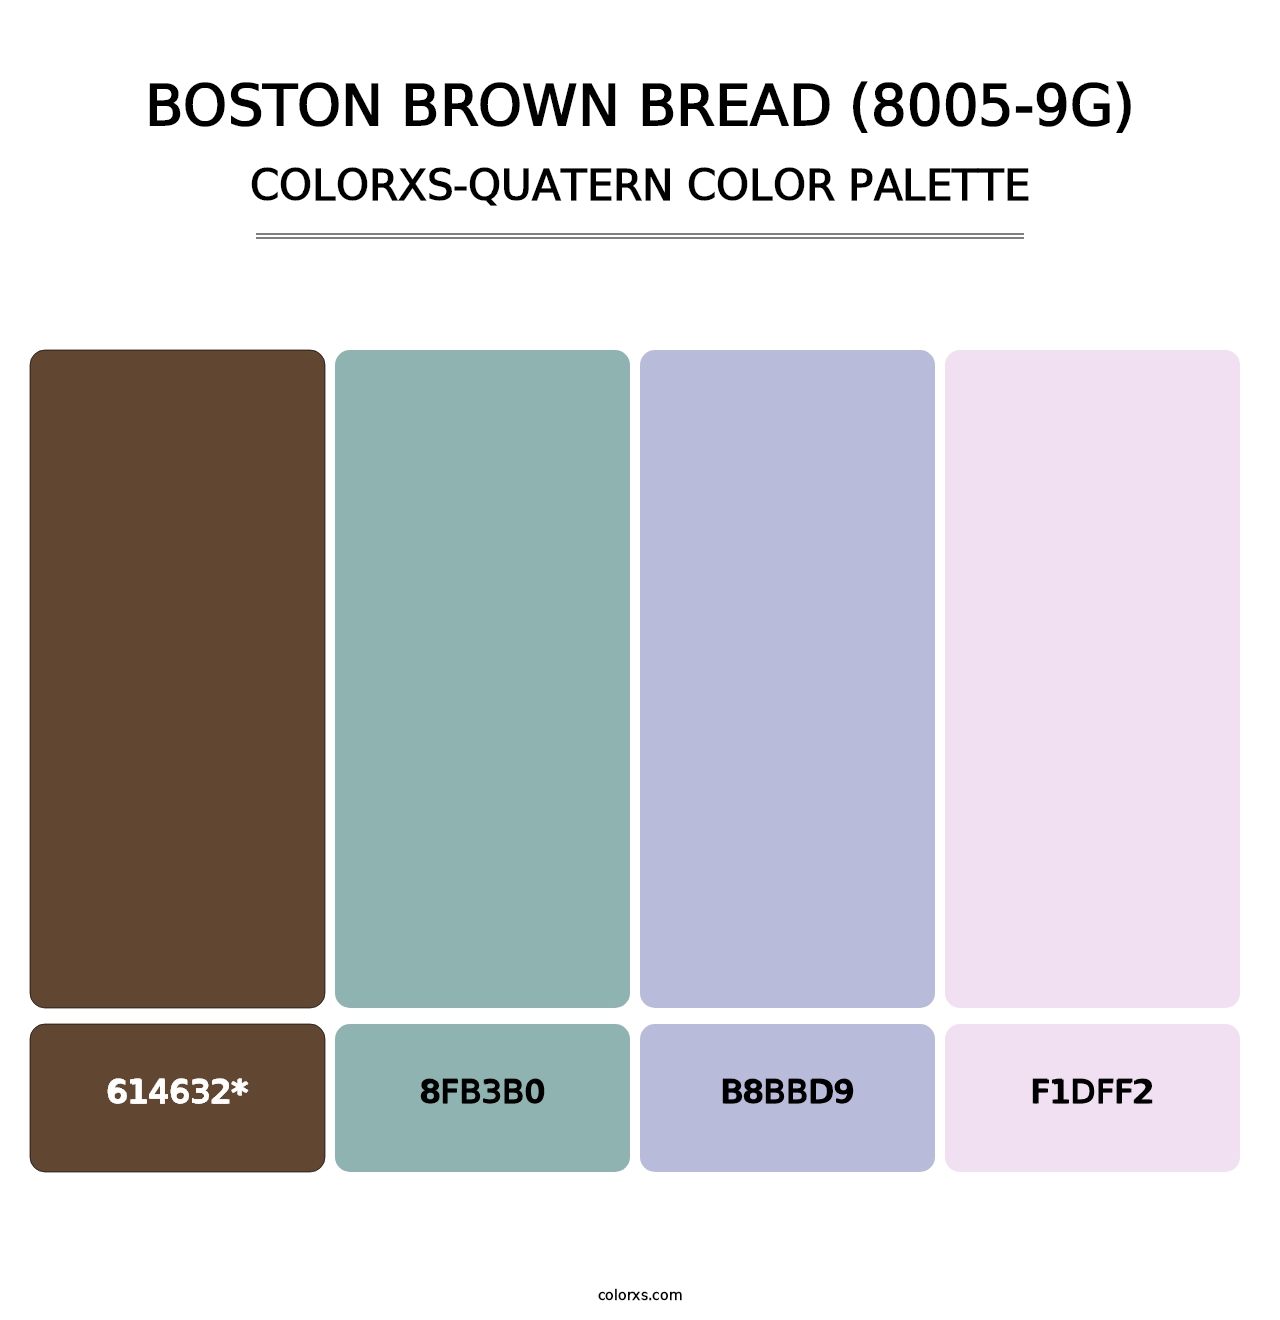 Boston Brown Bread (8005-9G) - Colorxs Quatern Palette